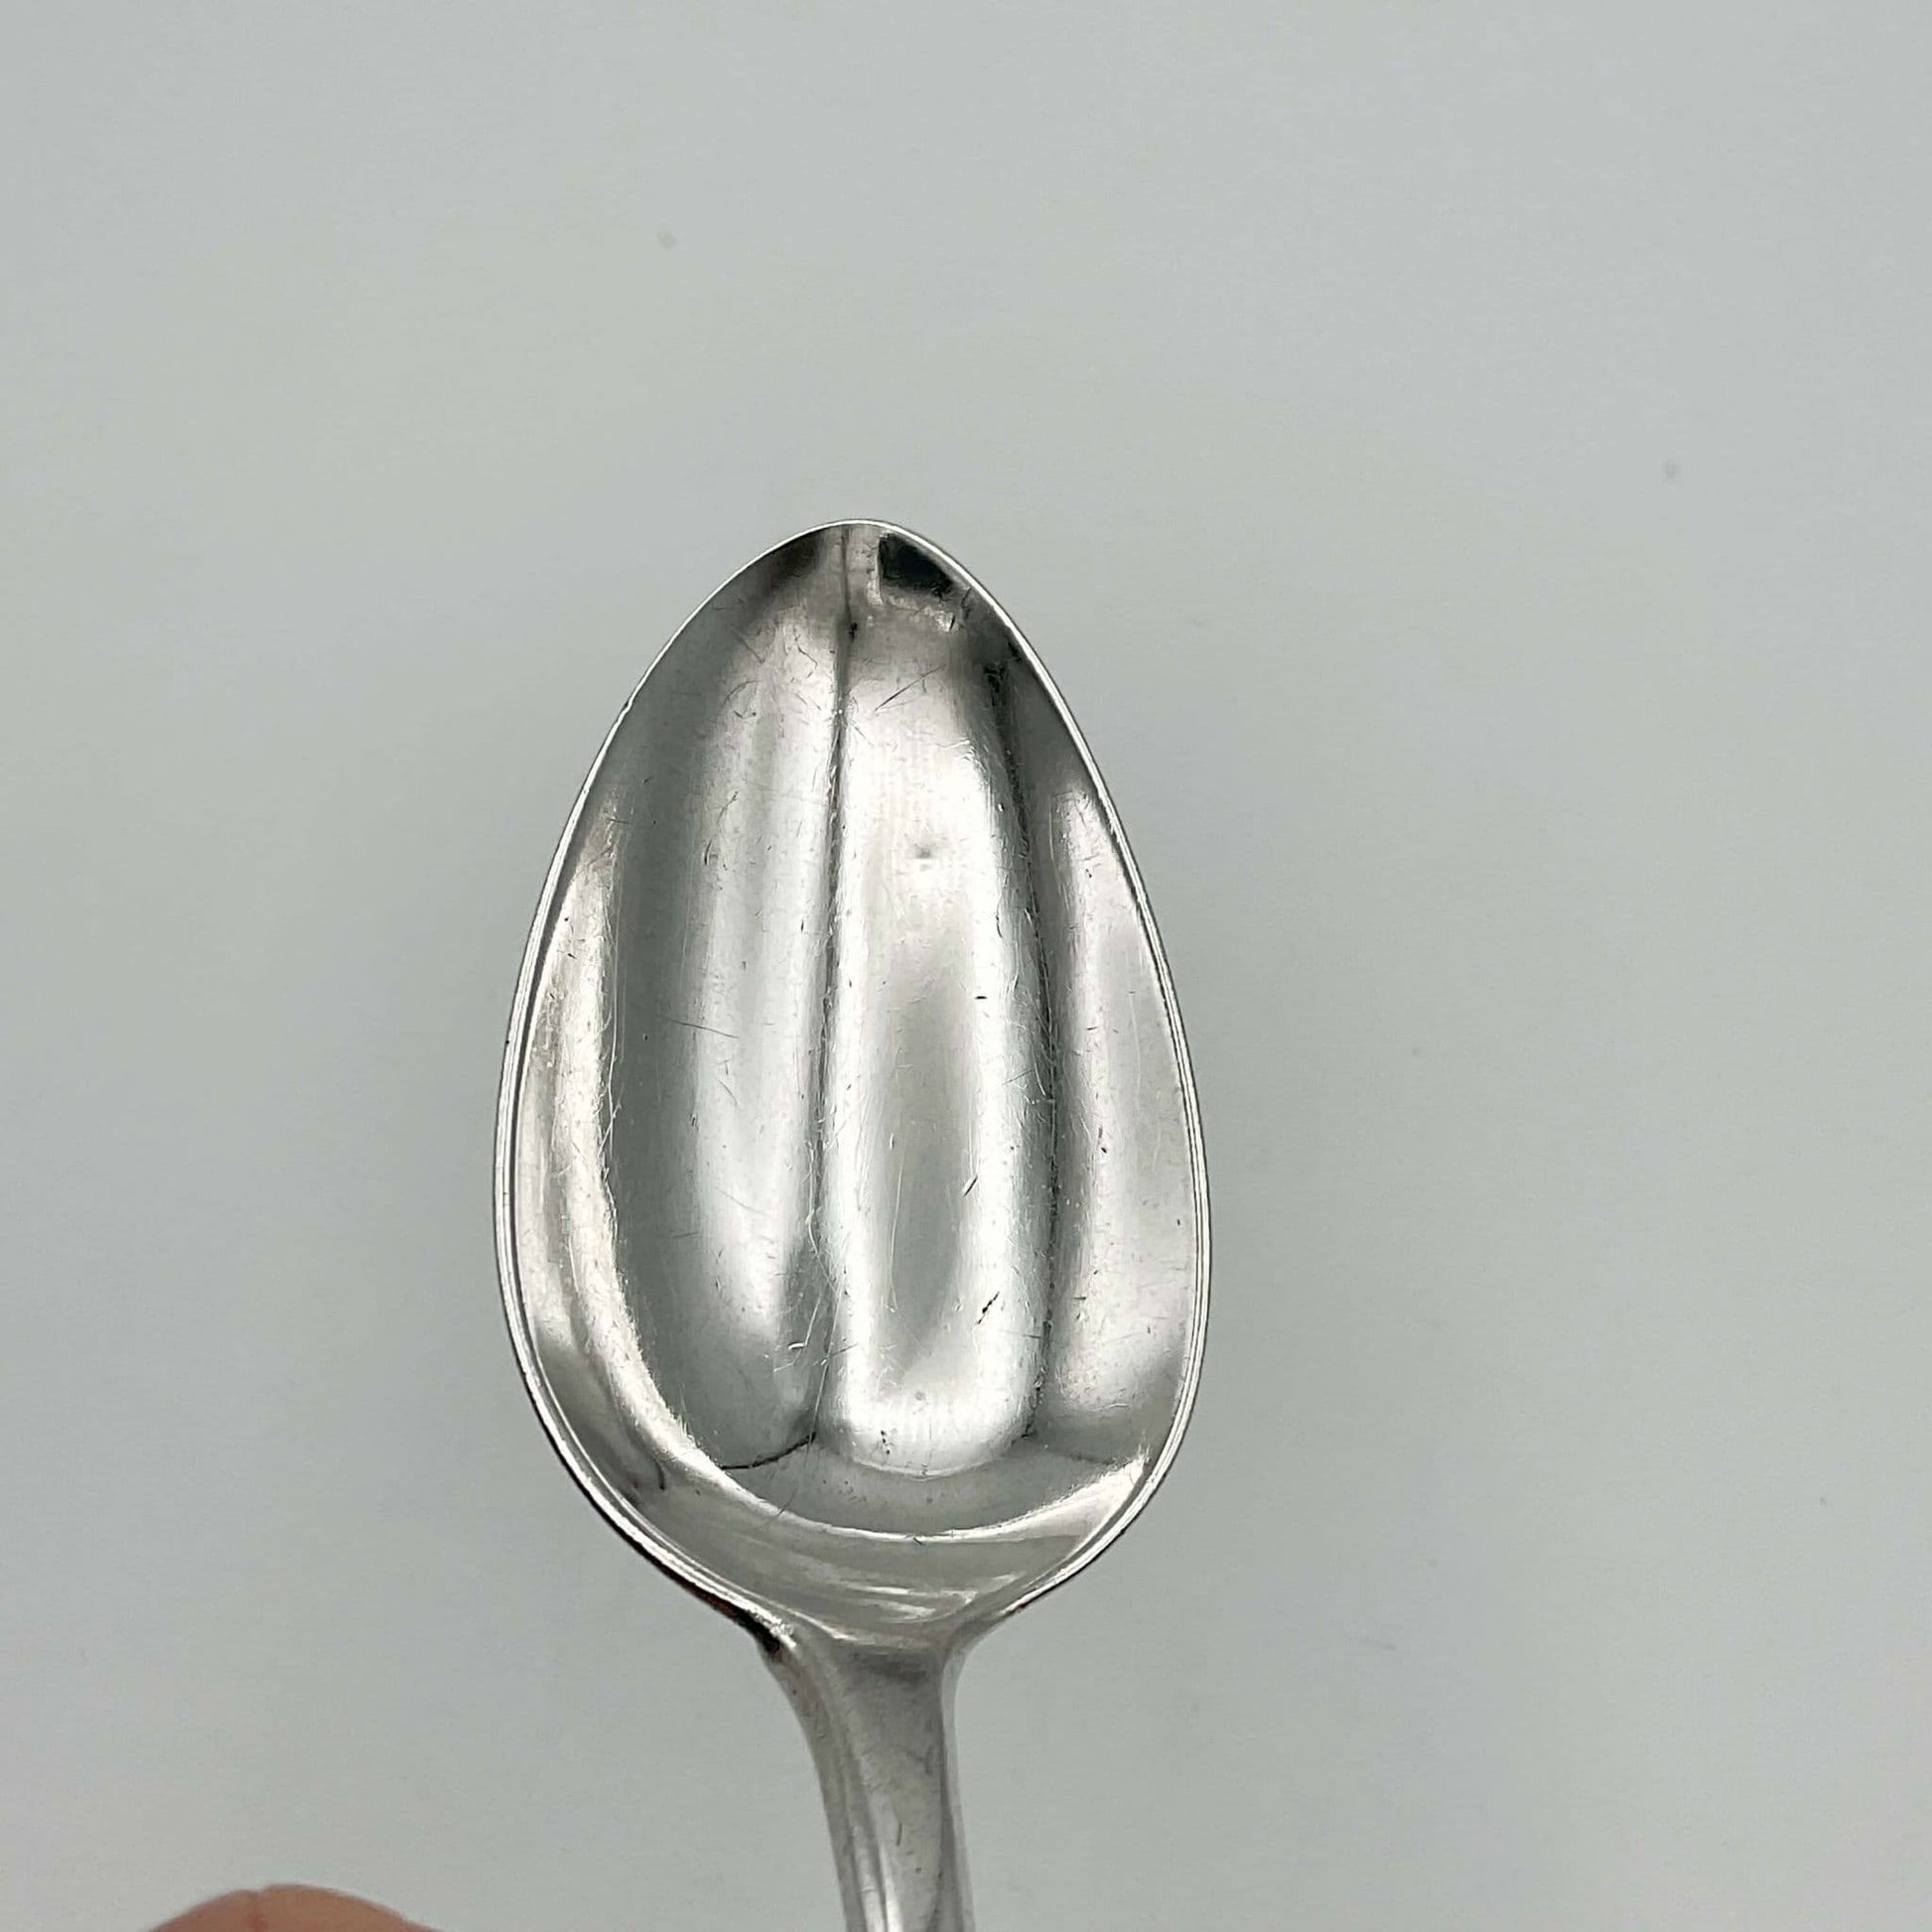 bowl of antique silver dessert spoon